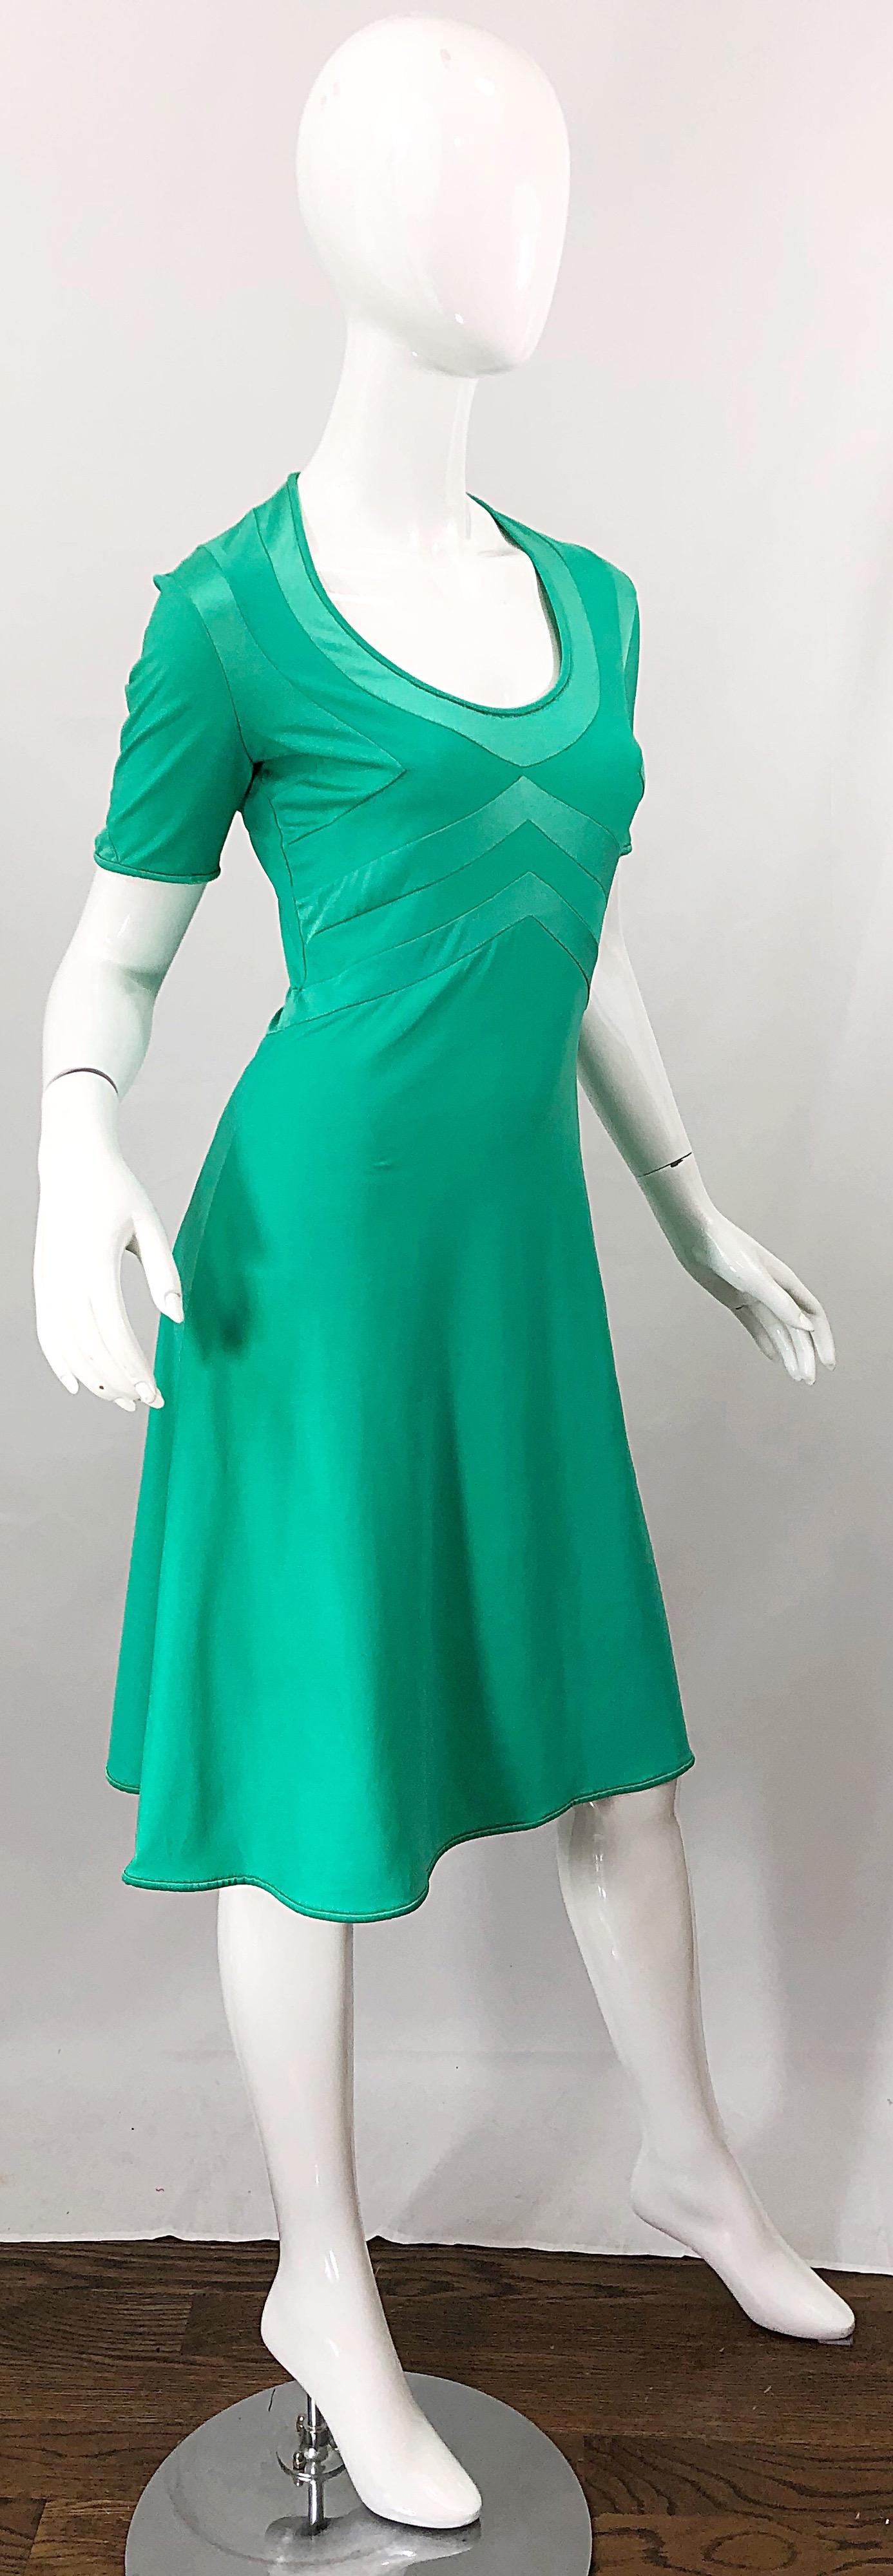 1970s Giorgio di Sant Angelo Kelly Green Slinky Bodysuit 70s Vintage Dress For Sale 4